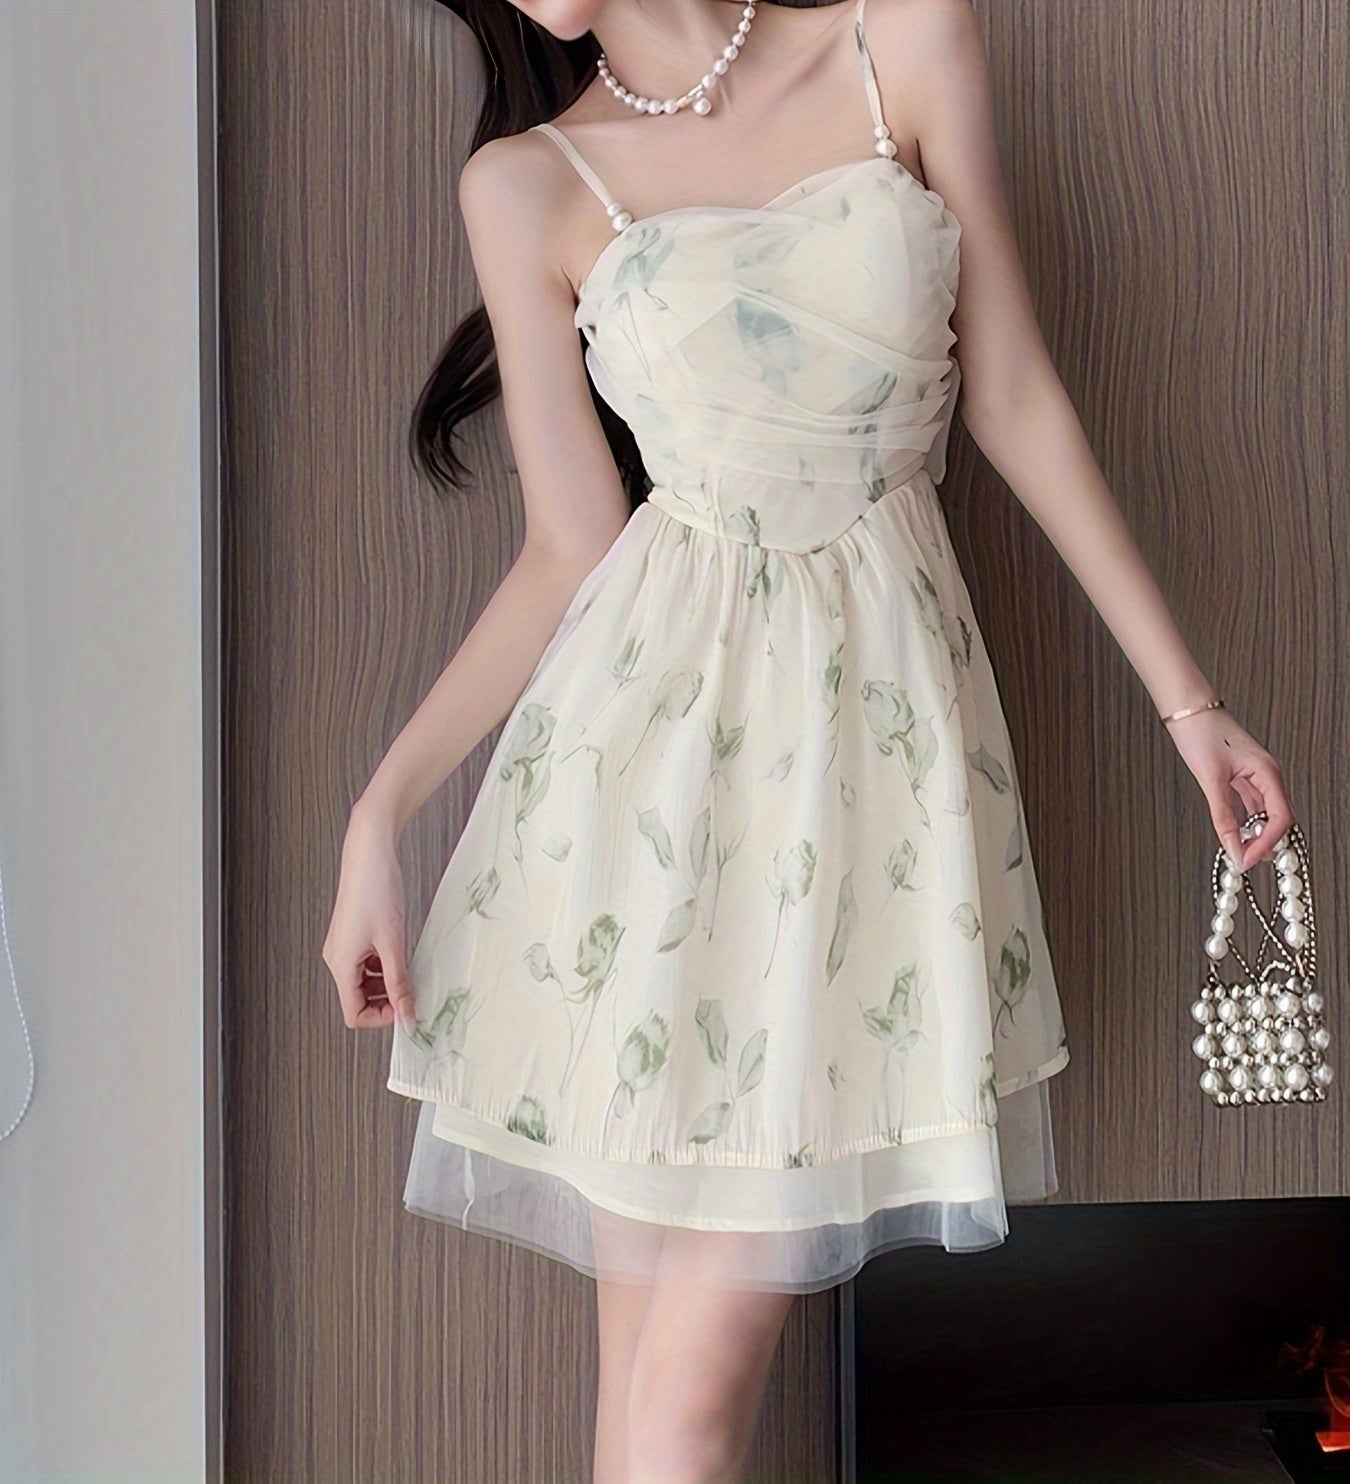 vzyzv  Floral Print Contrast Mesh Dress, Elegant Spaghetti Knot Sleeveless Dress, Women's Clothing